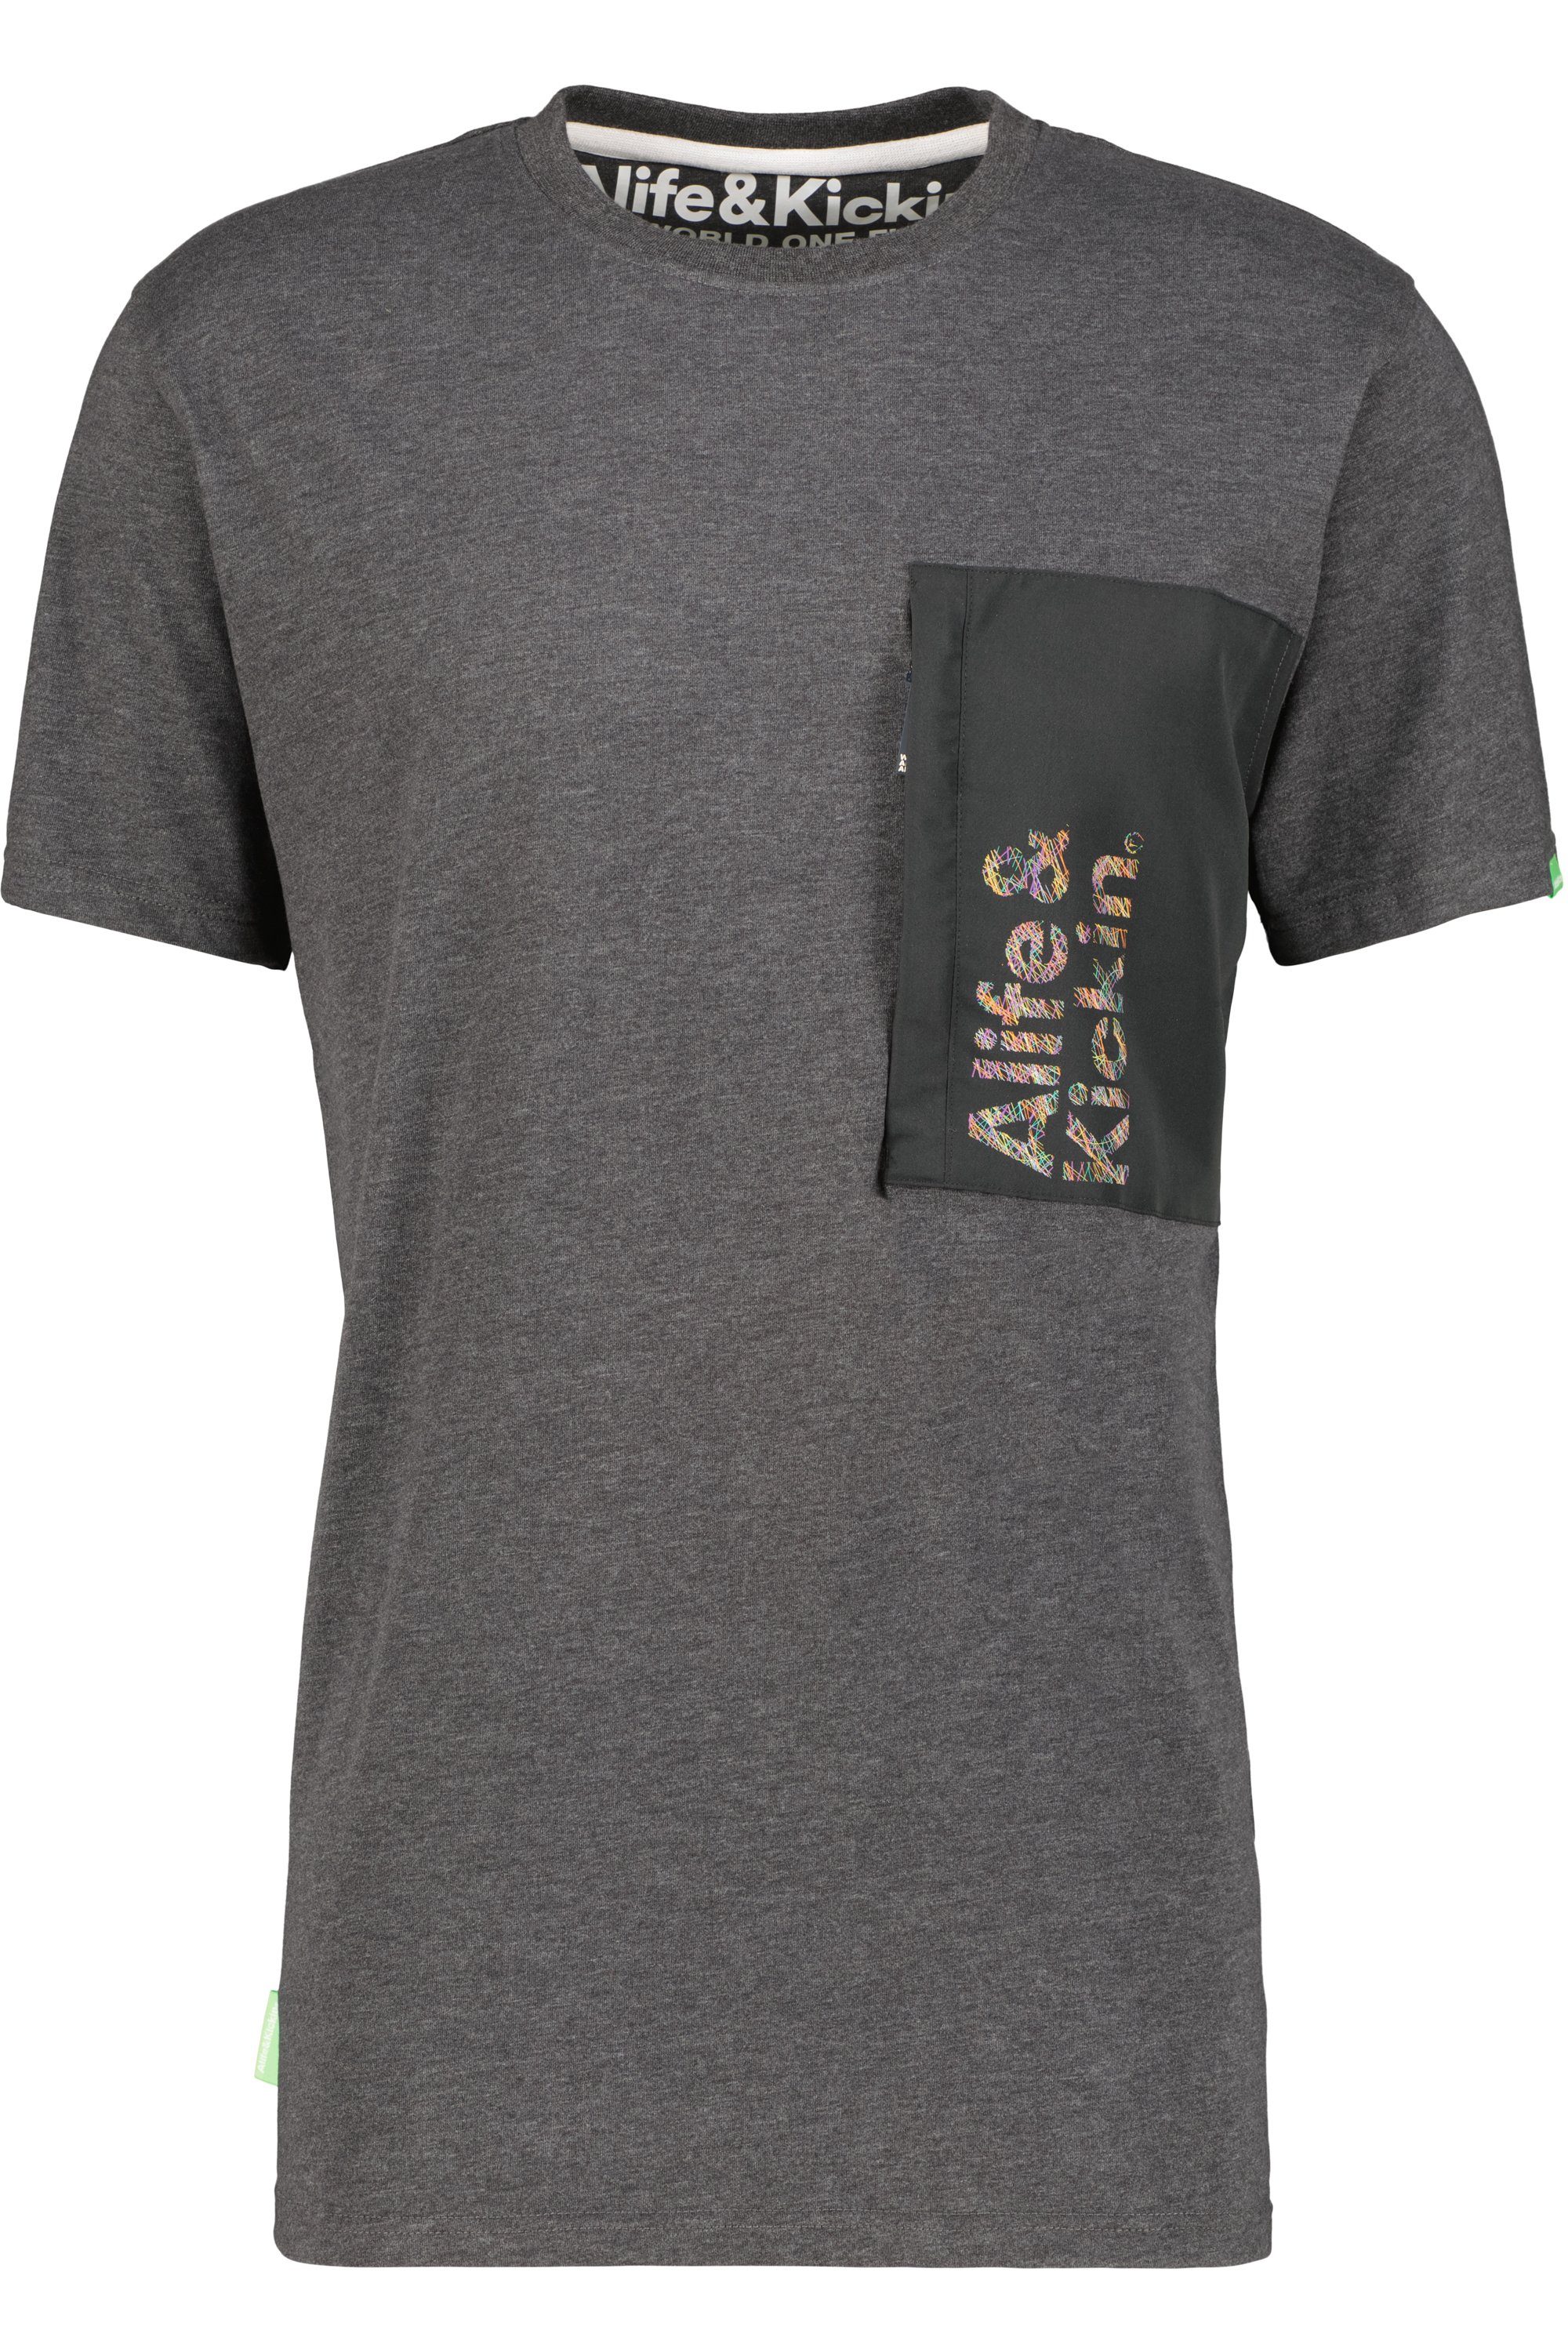 Alife & Kickin T-Shirt Herren RossAK T-Shirt Shirt moonless